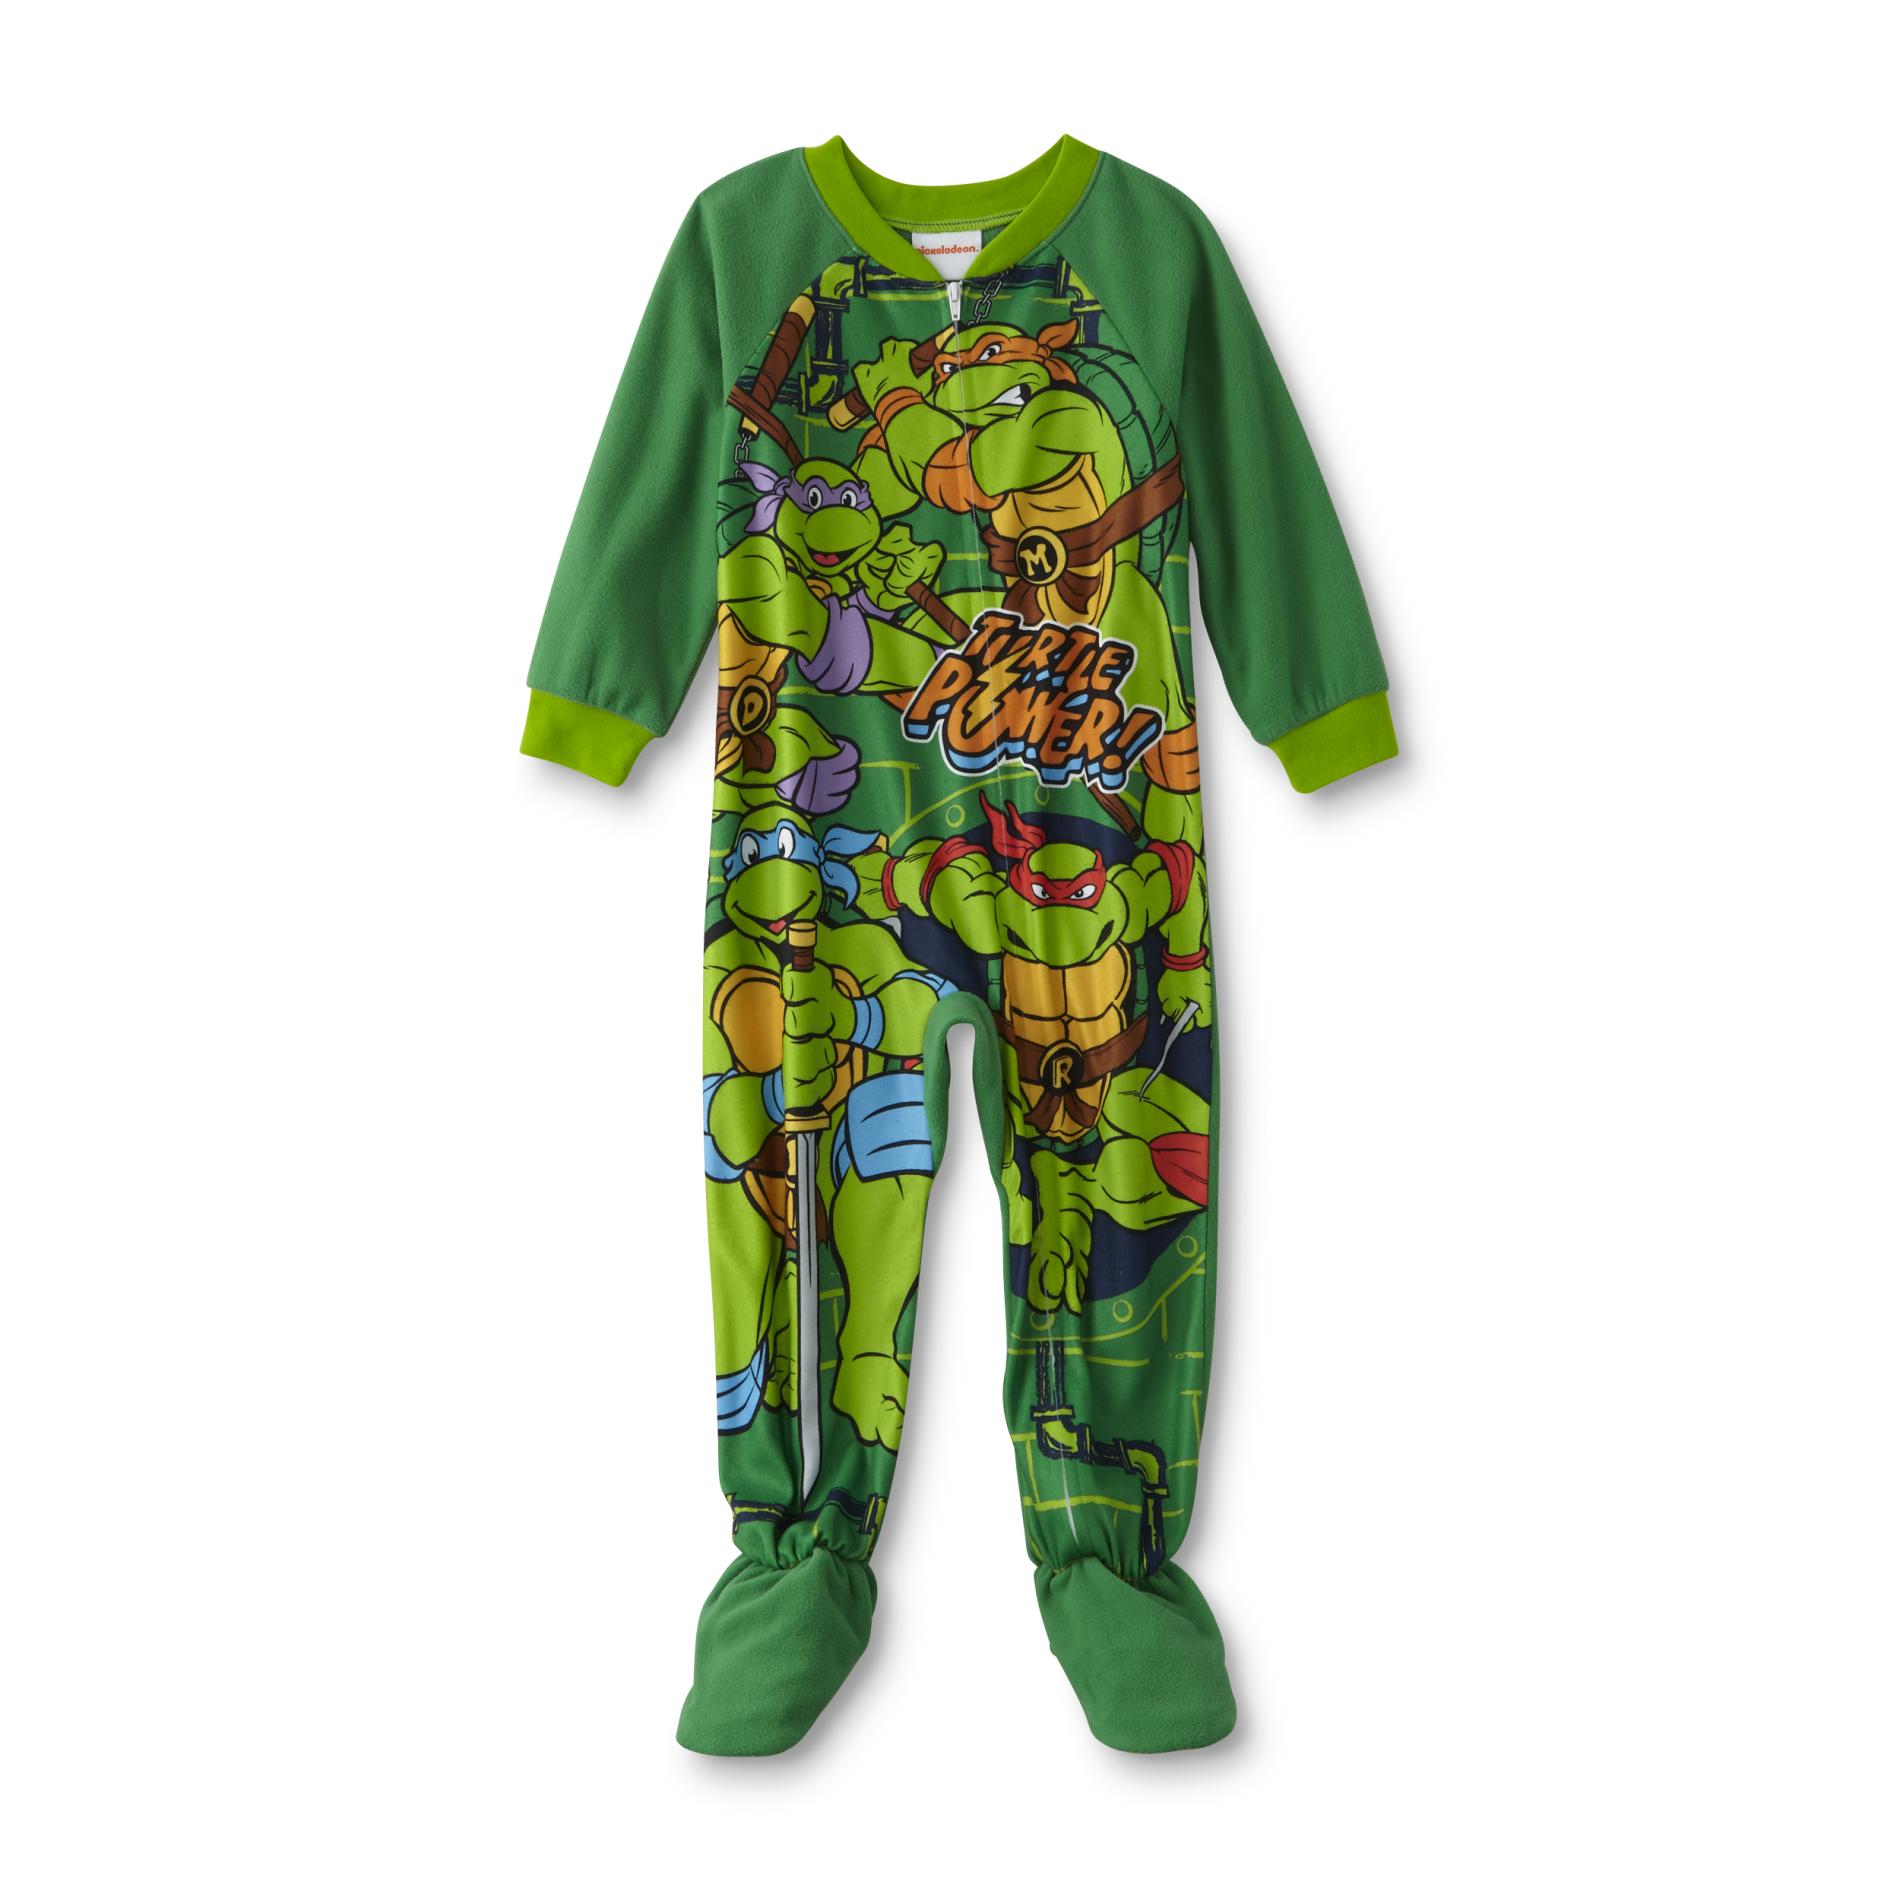 Nickelodeon Teenage Mutant Ninja Turtles Toddler Boy's Sleeper Pajamas